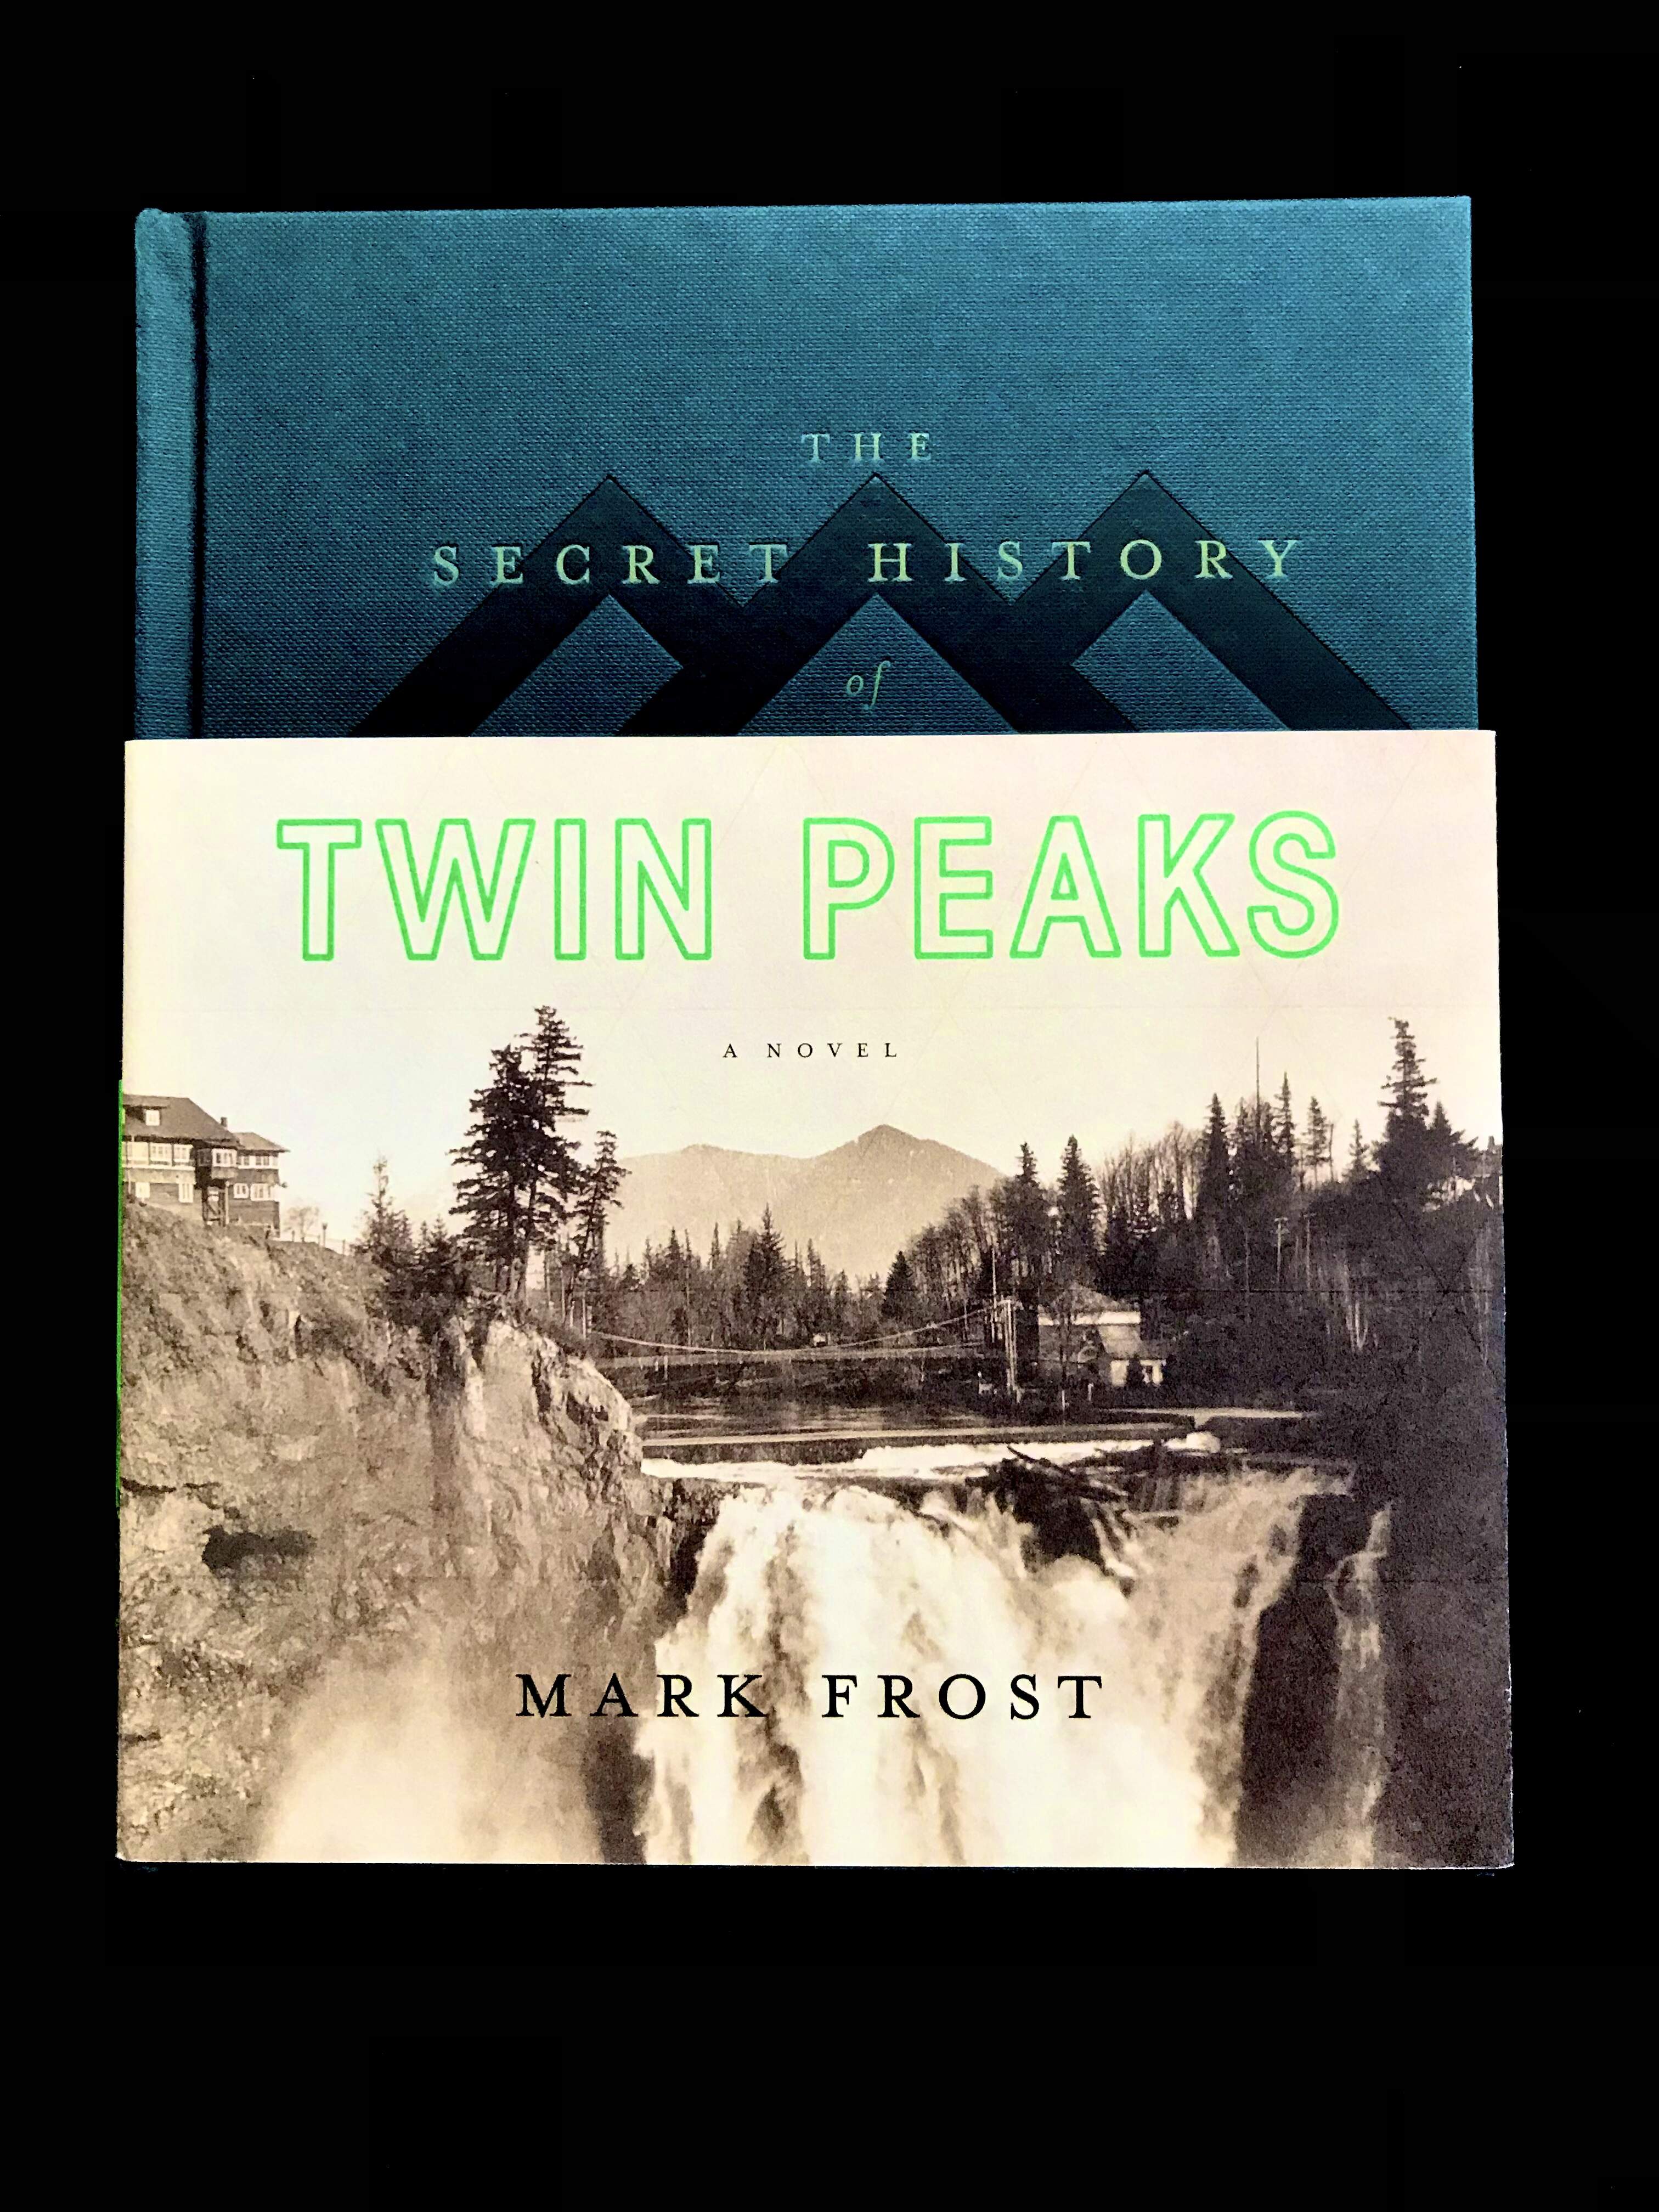 The Secret History of Twin Peaks by Mark Frost